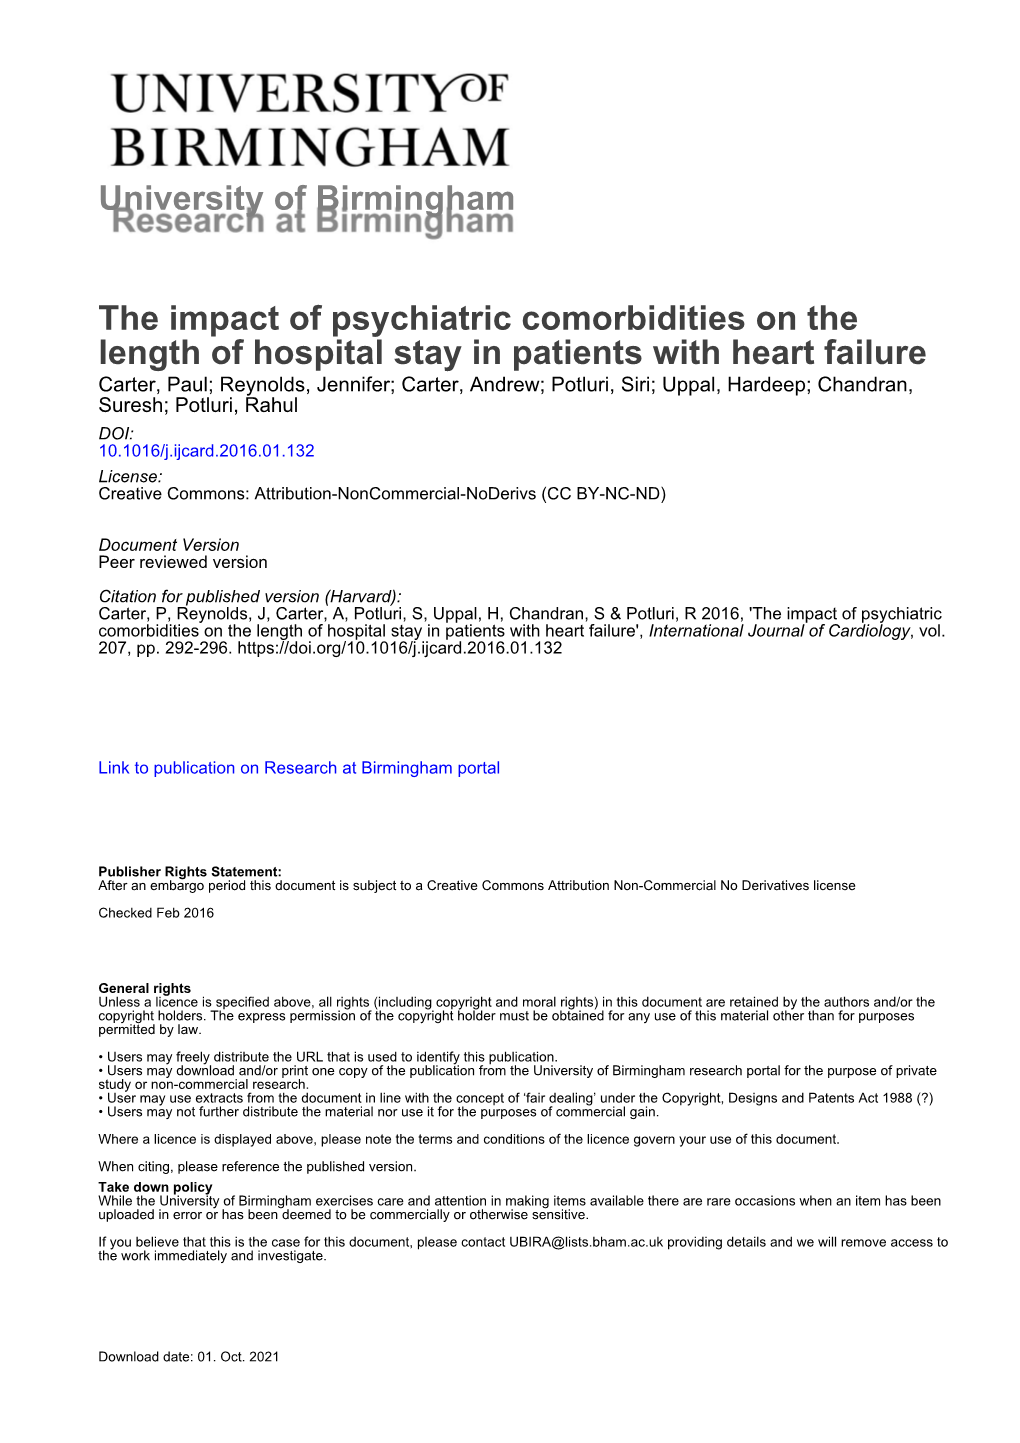 The Impact of Psychiatric Comorbidities on the Length